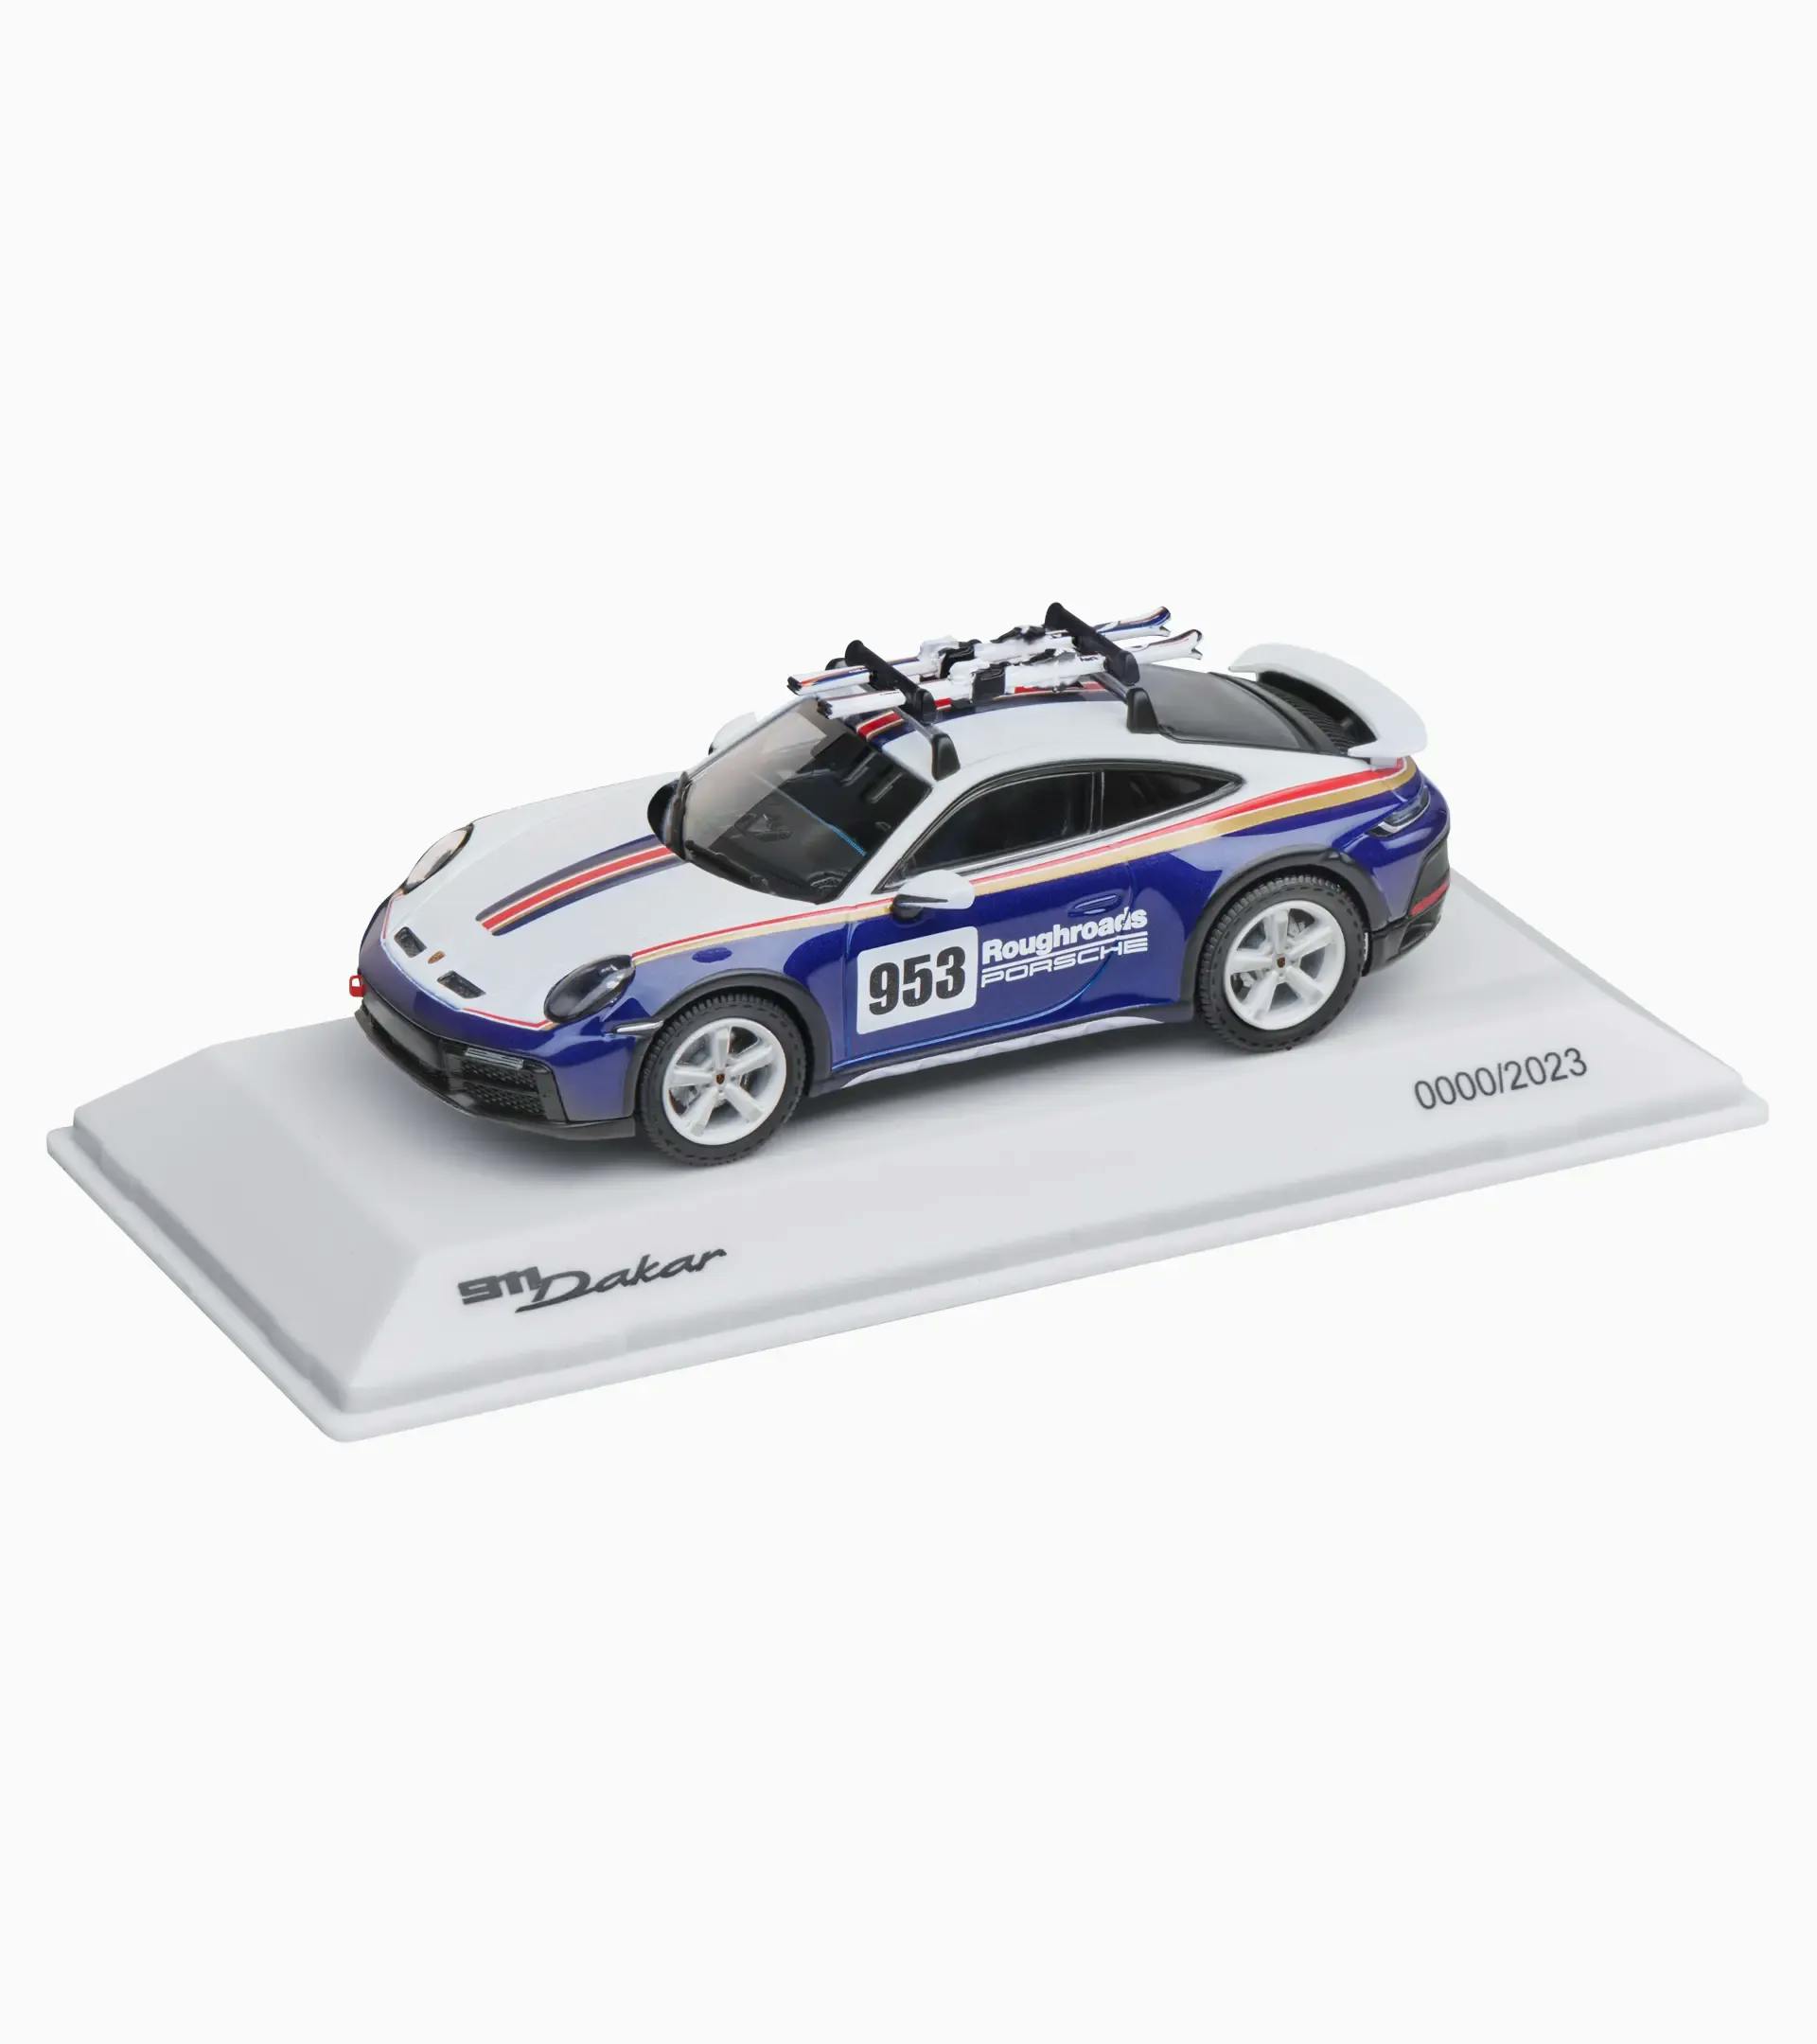 Porsche 911 Dakar (992) with skis – Christmas – Ltd., modellino porsche 